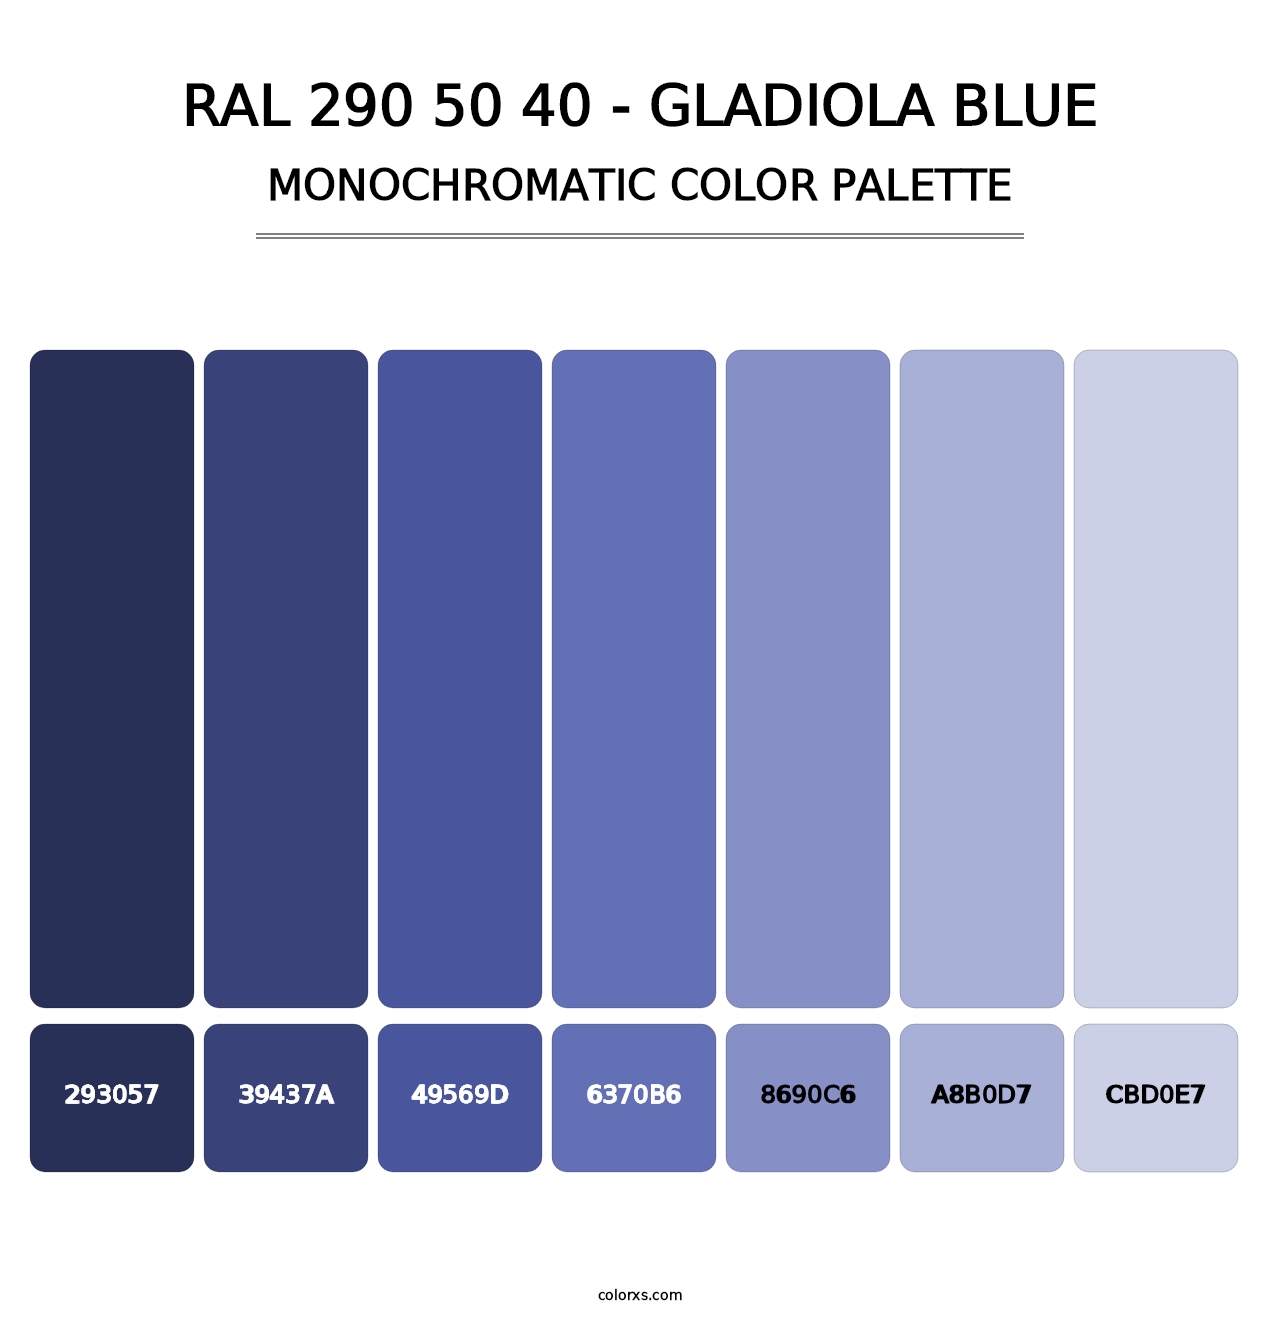 RAL 290 50 40 - Gladiola Blue - Monochromatic Color Palette